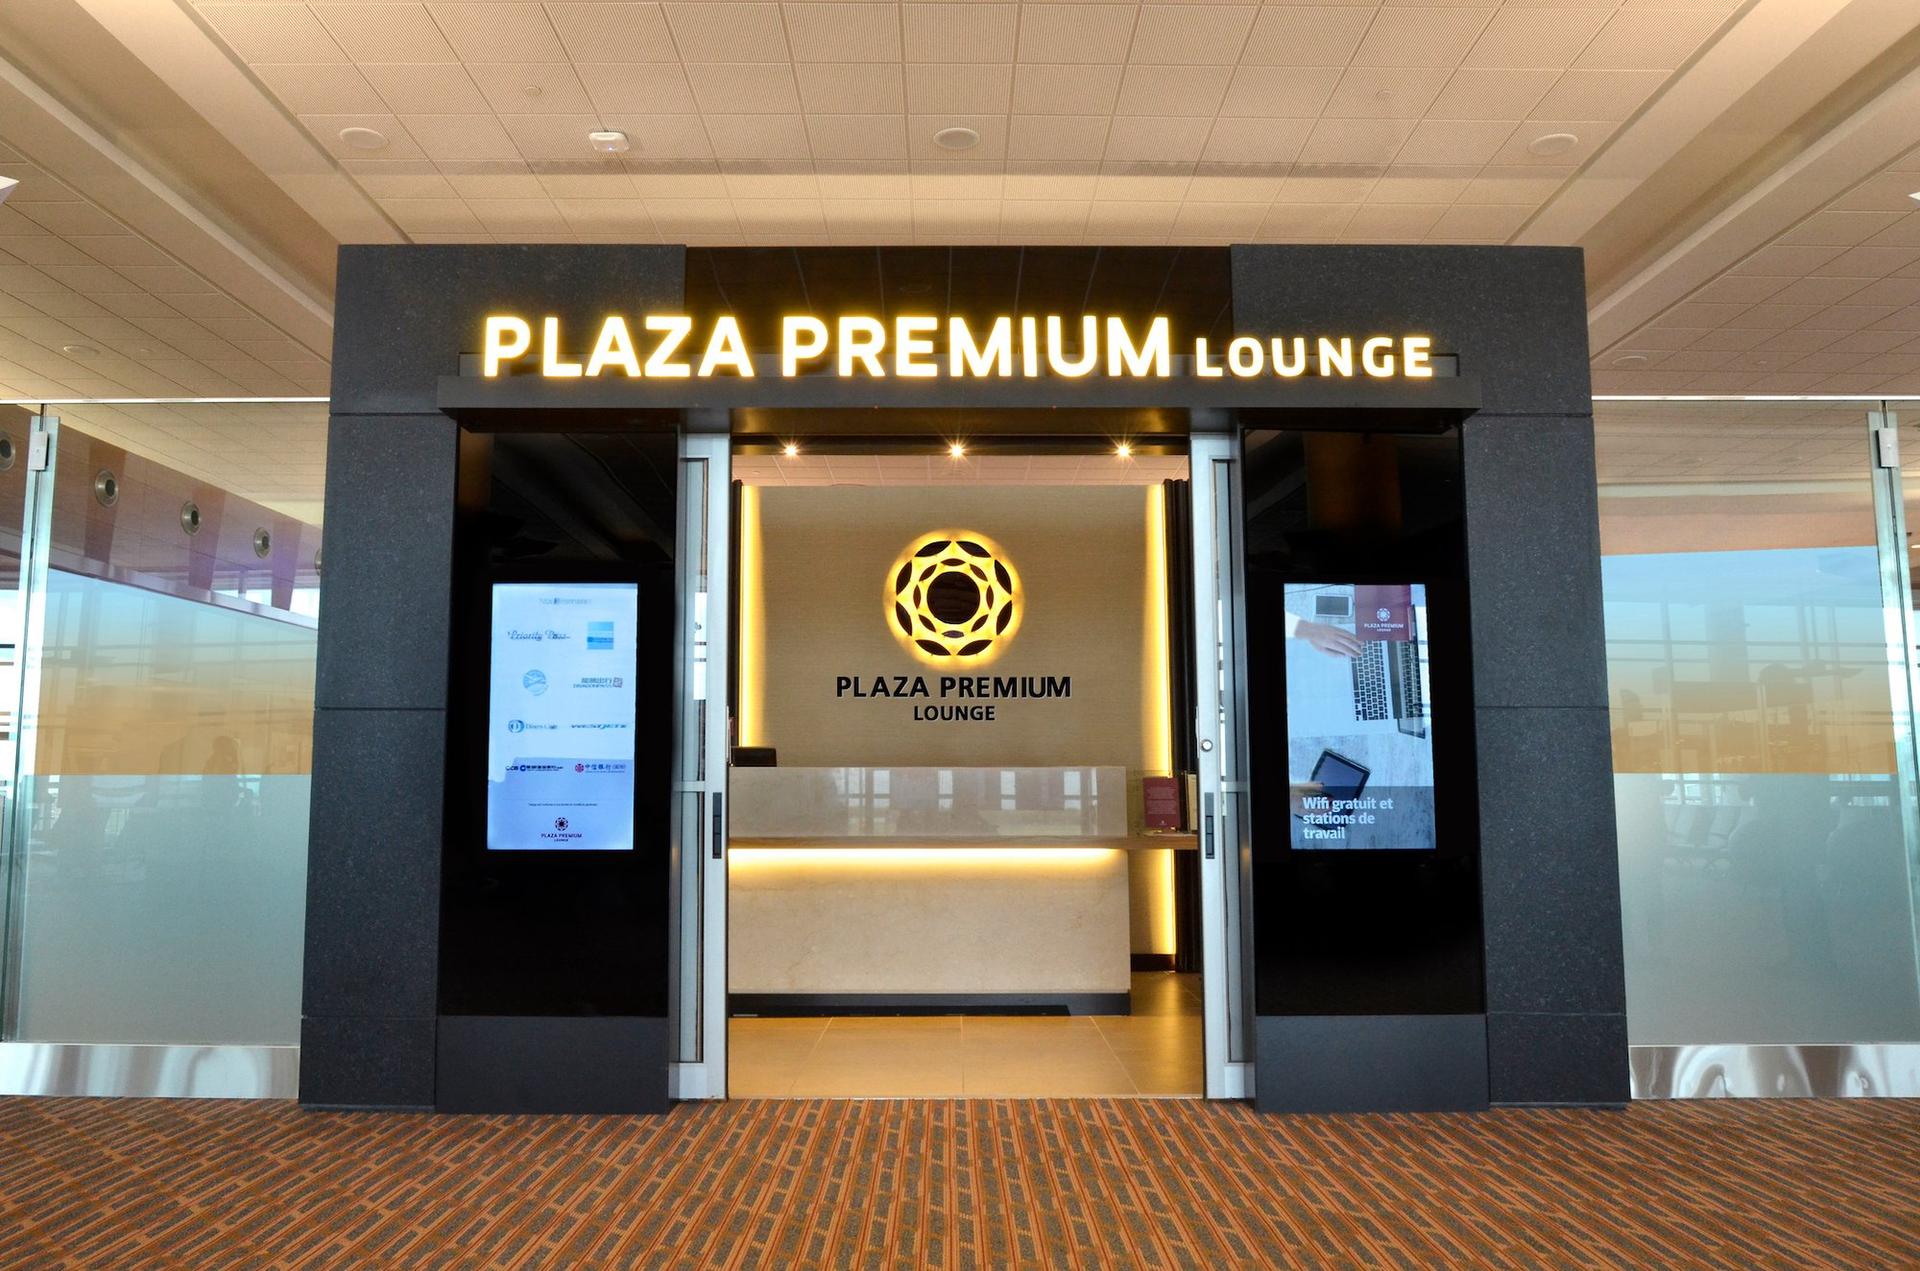 Plaza Premium Lounge image 3 of 45